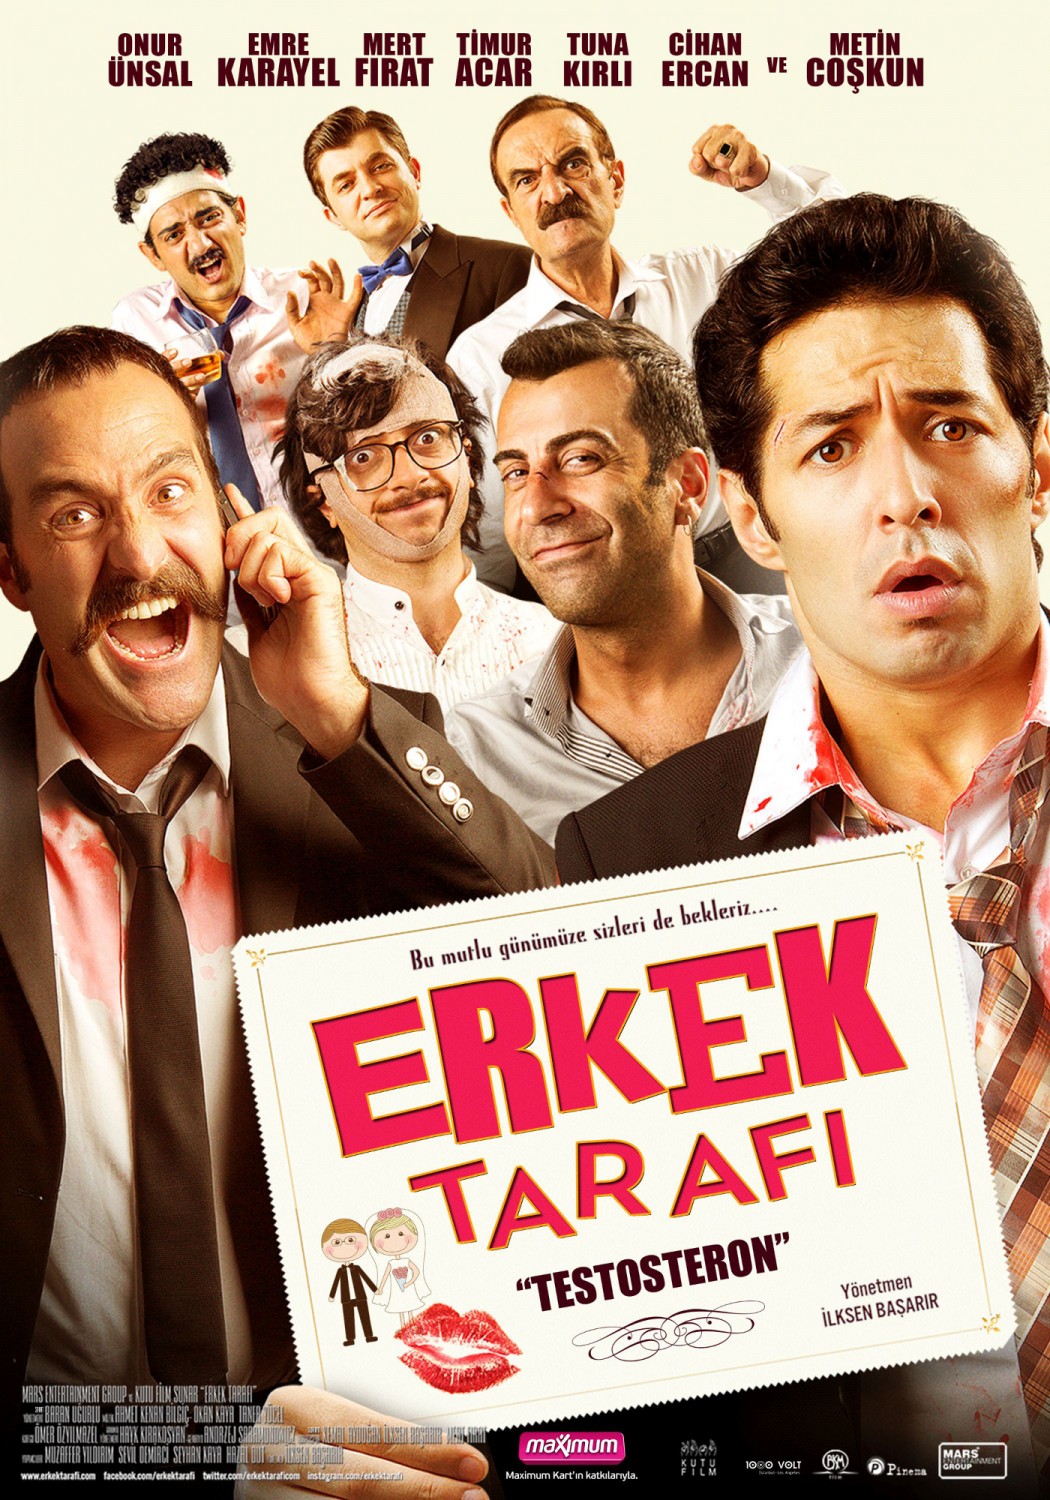 Extra Large Movie Poster Image for Erkek tarafi testosteron 